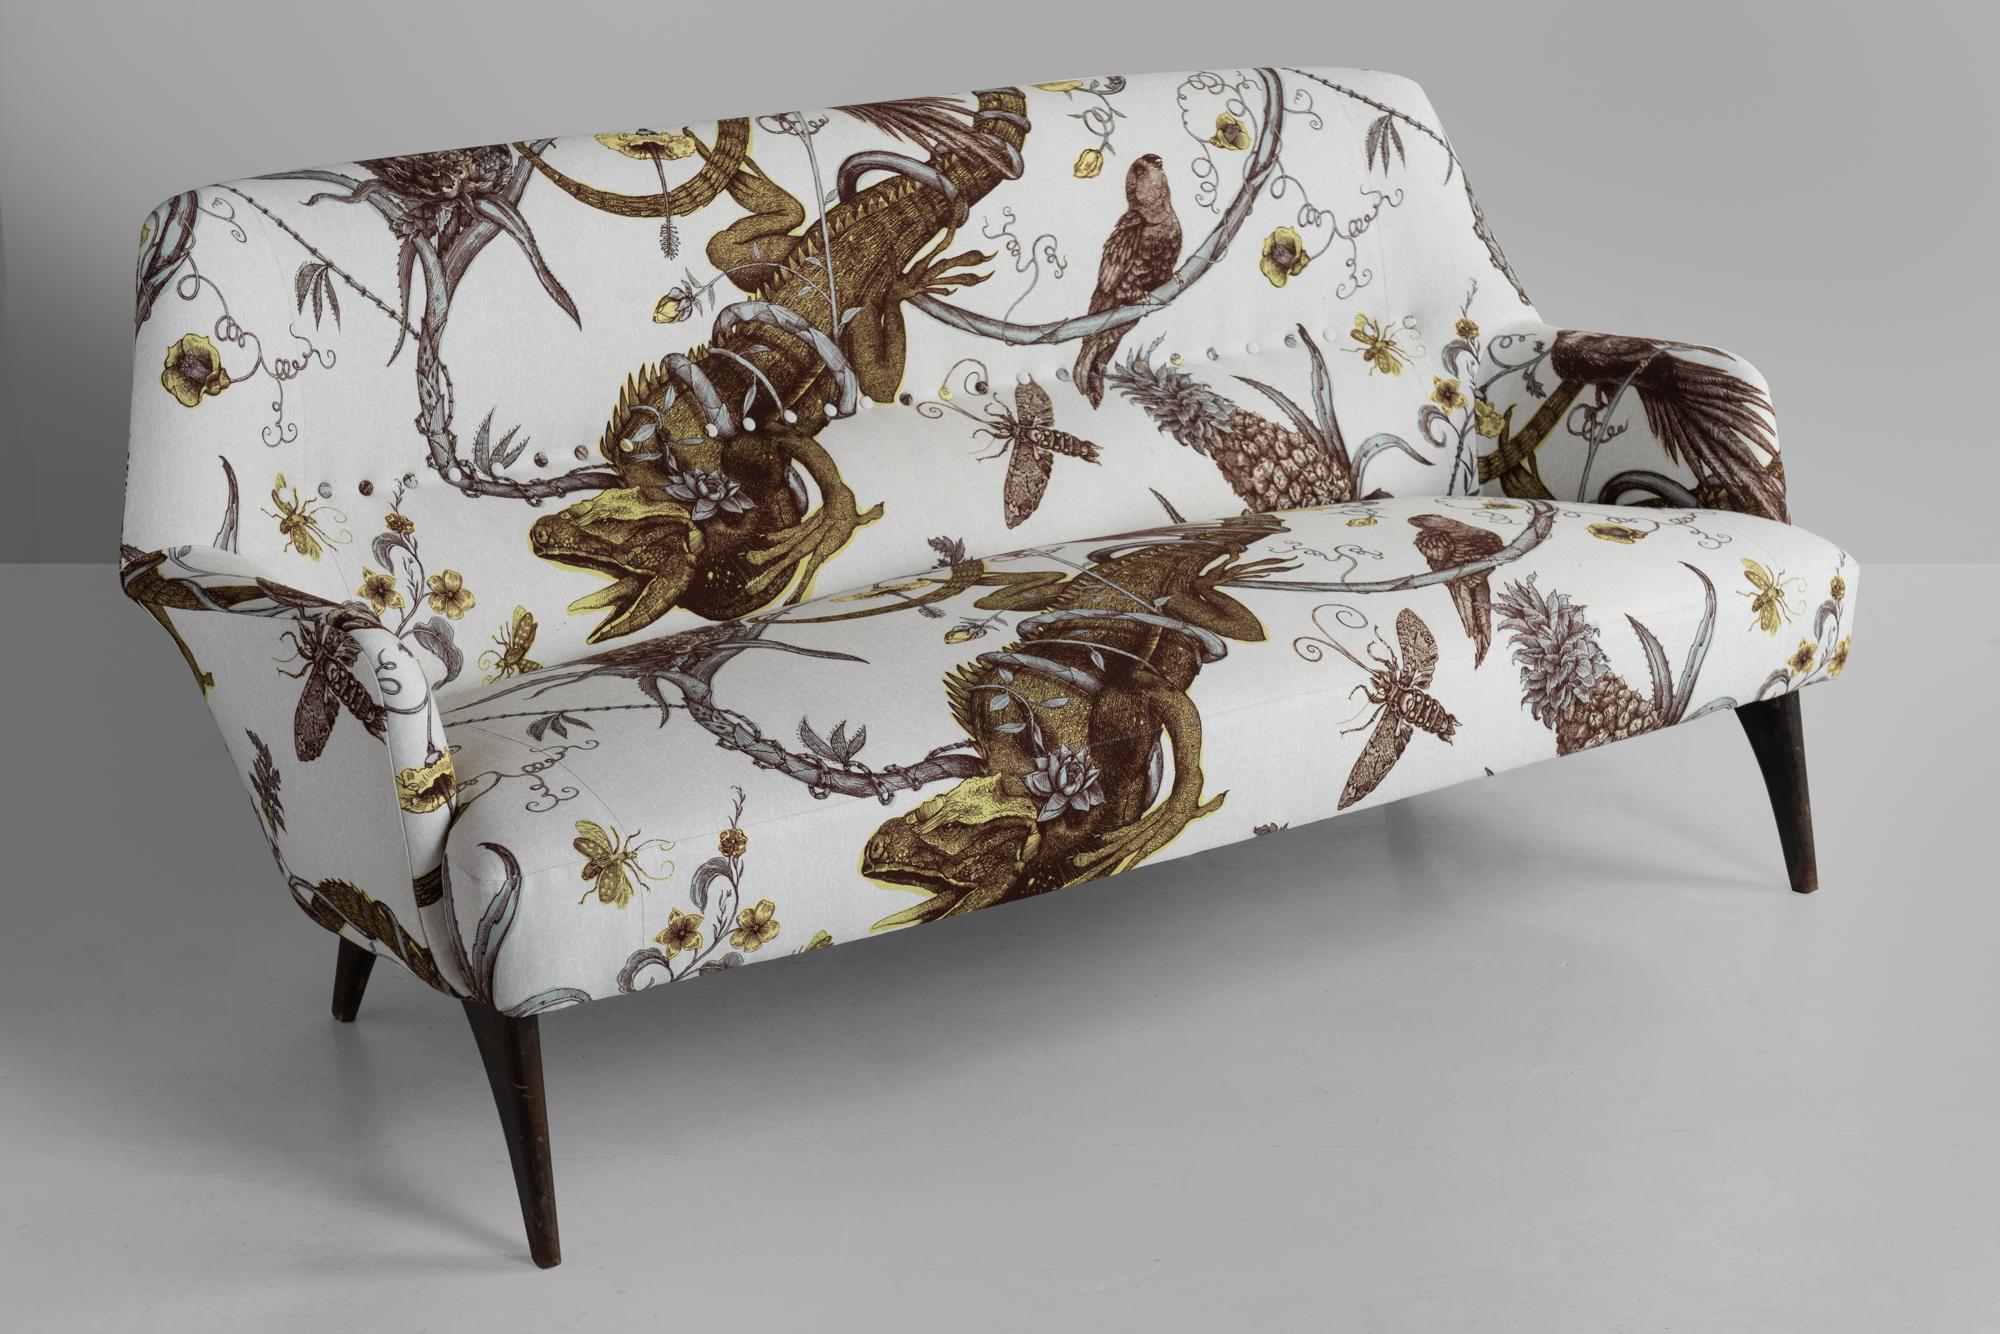 Iguana loveseat lounge by Bergamo ISA, circa 1950

Newly upholstered in linen Timorous Beasties fabric on an original frame.